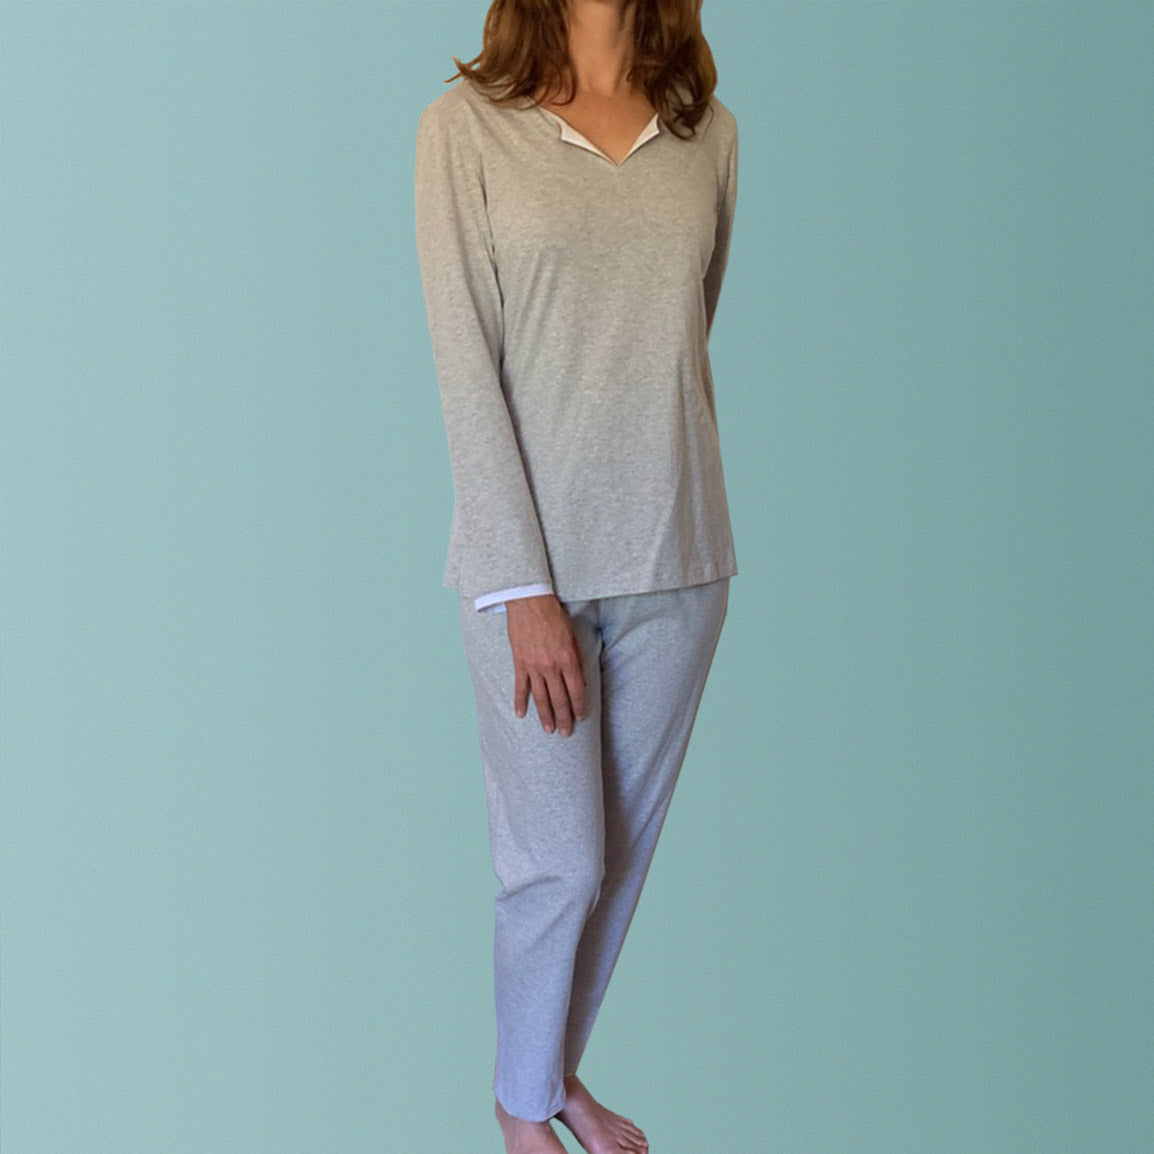 Organic cotton pyjamas Australia. These womens pyjamas are made from certified organic cotton jersey.